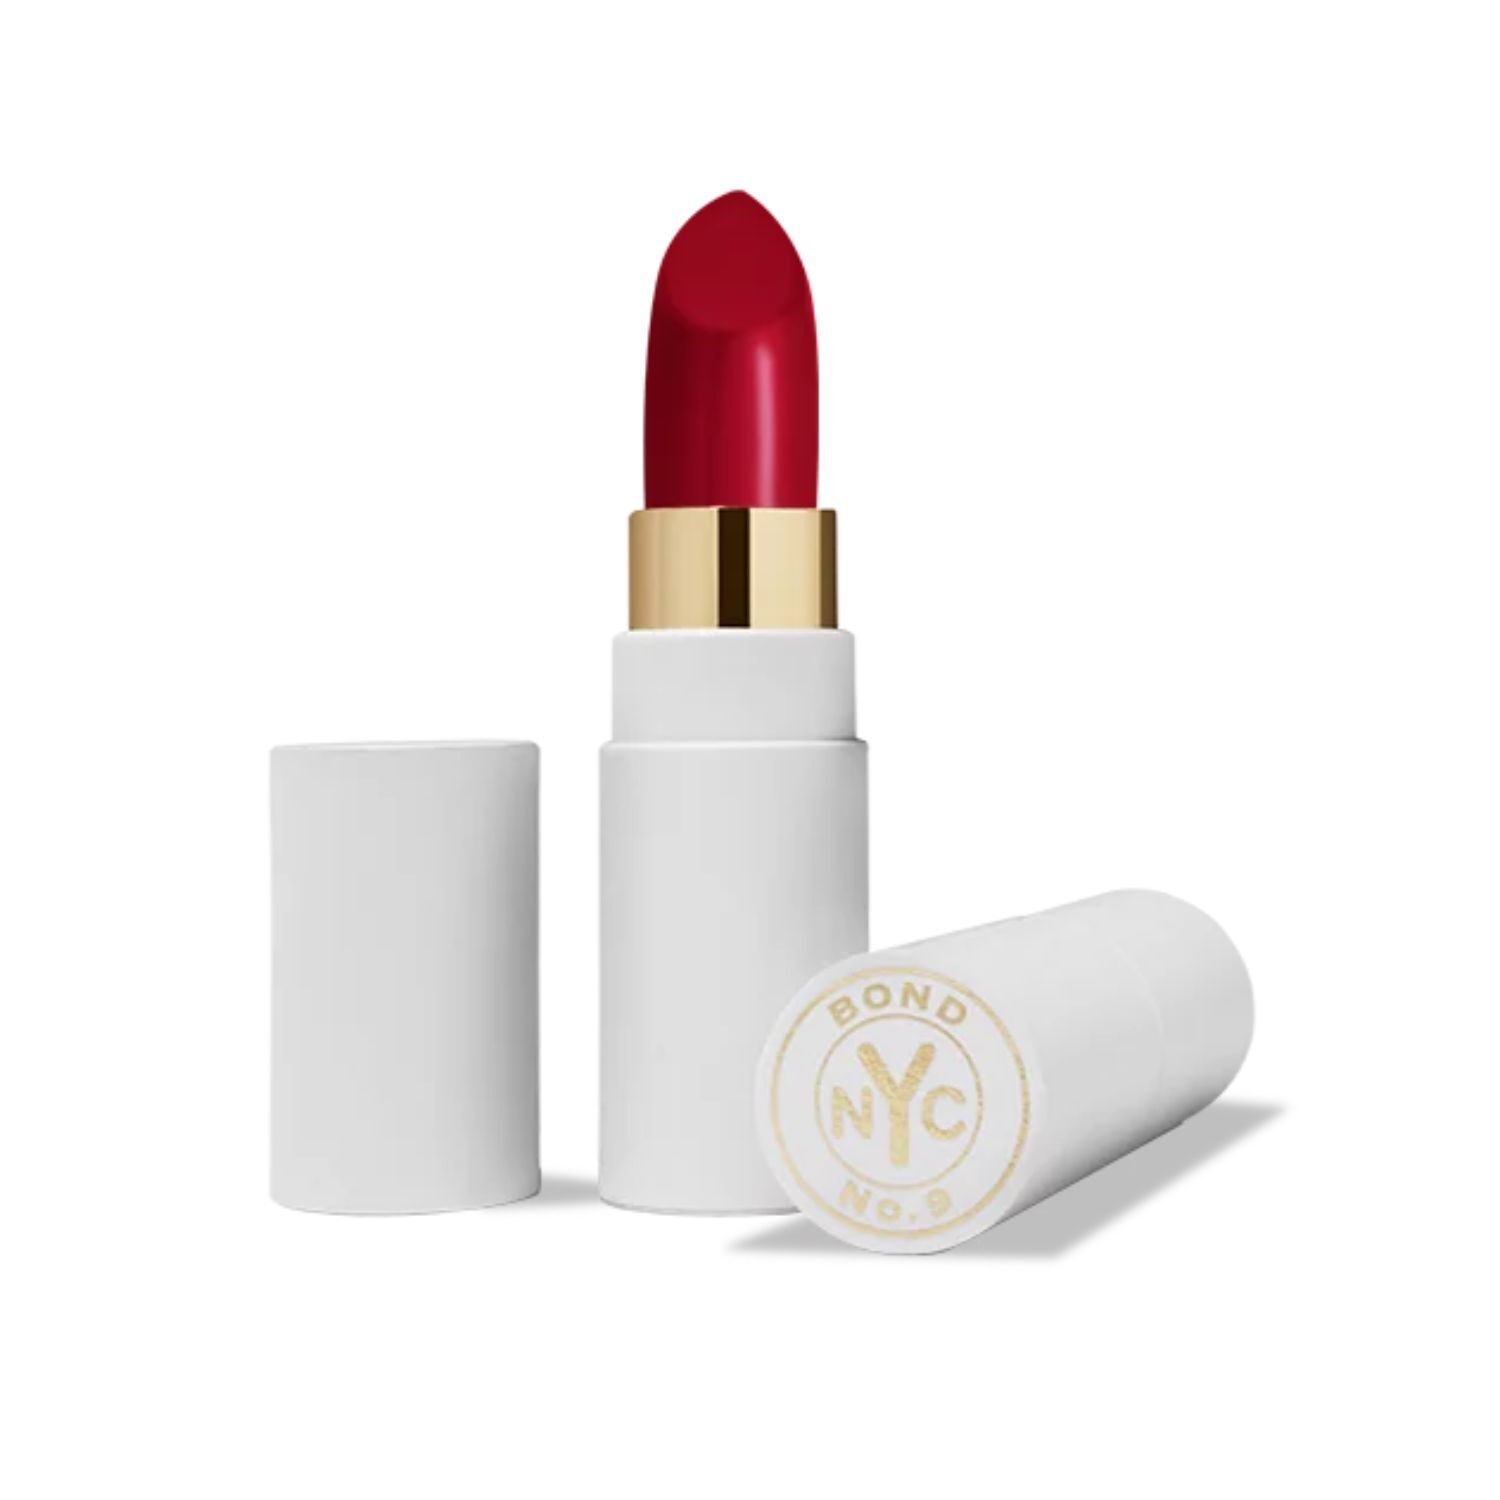 Bond No.9 Park Avenue Lipstick Refill